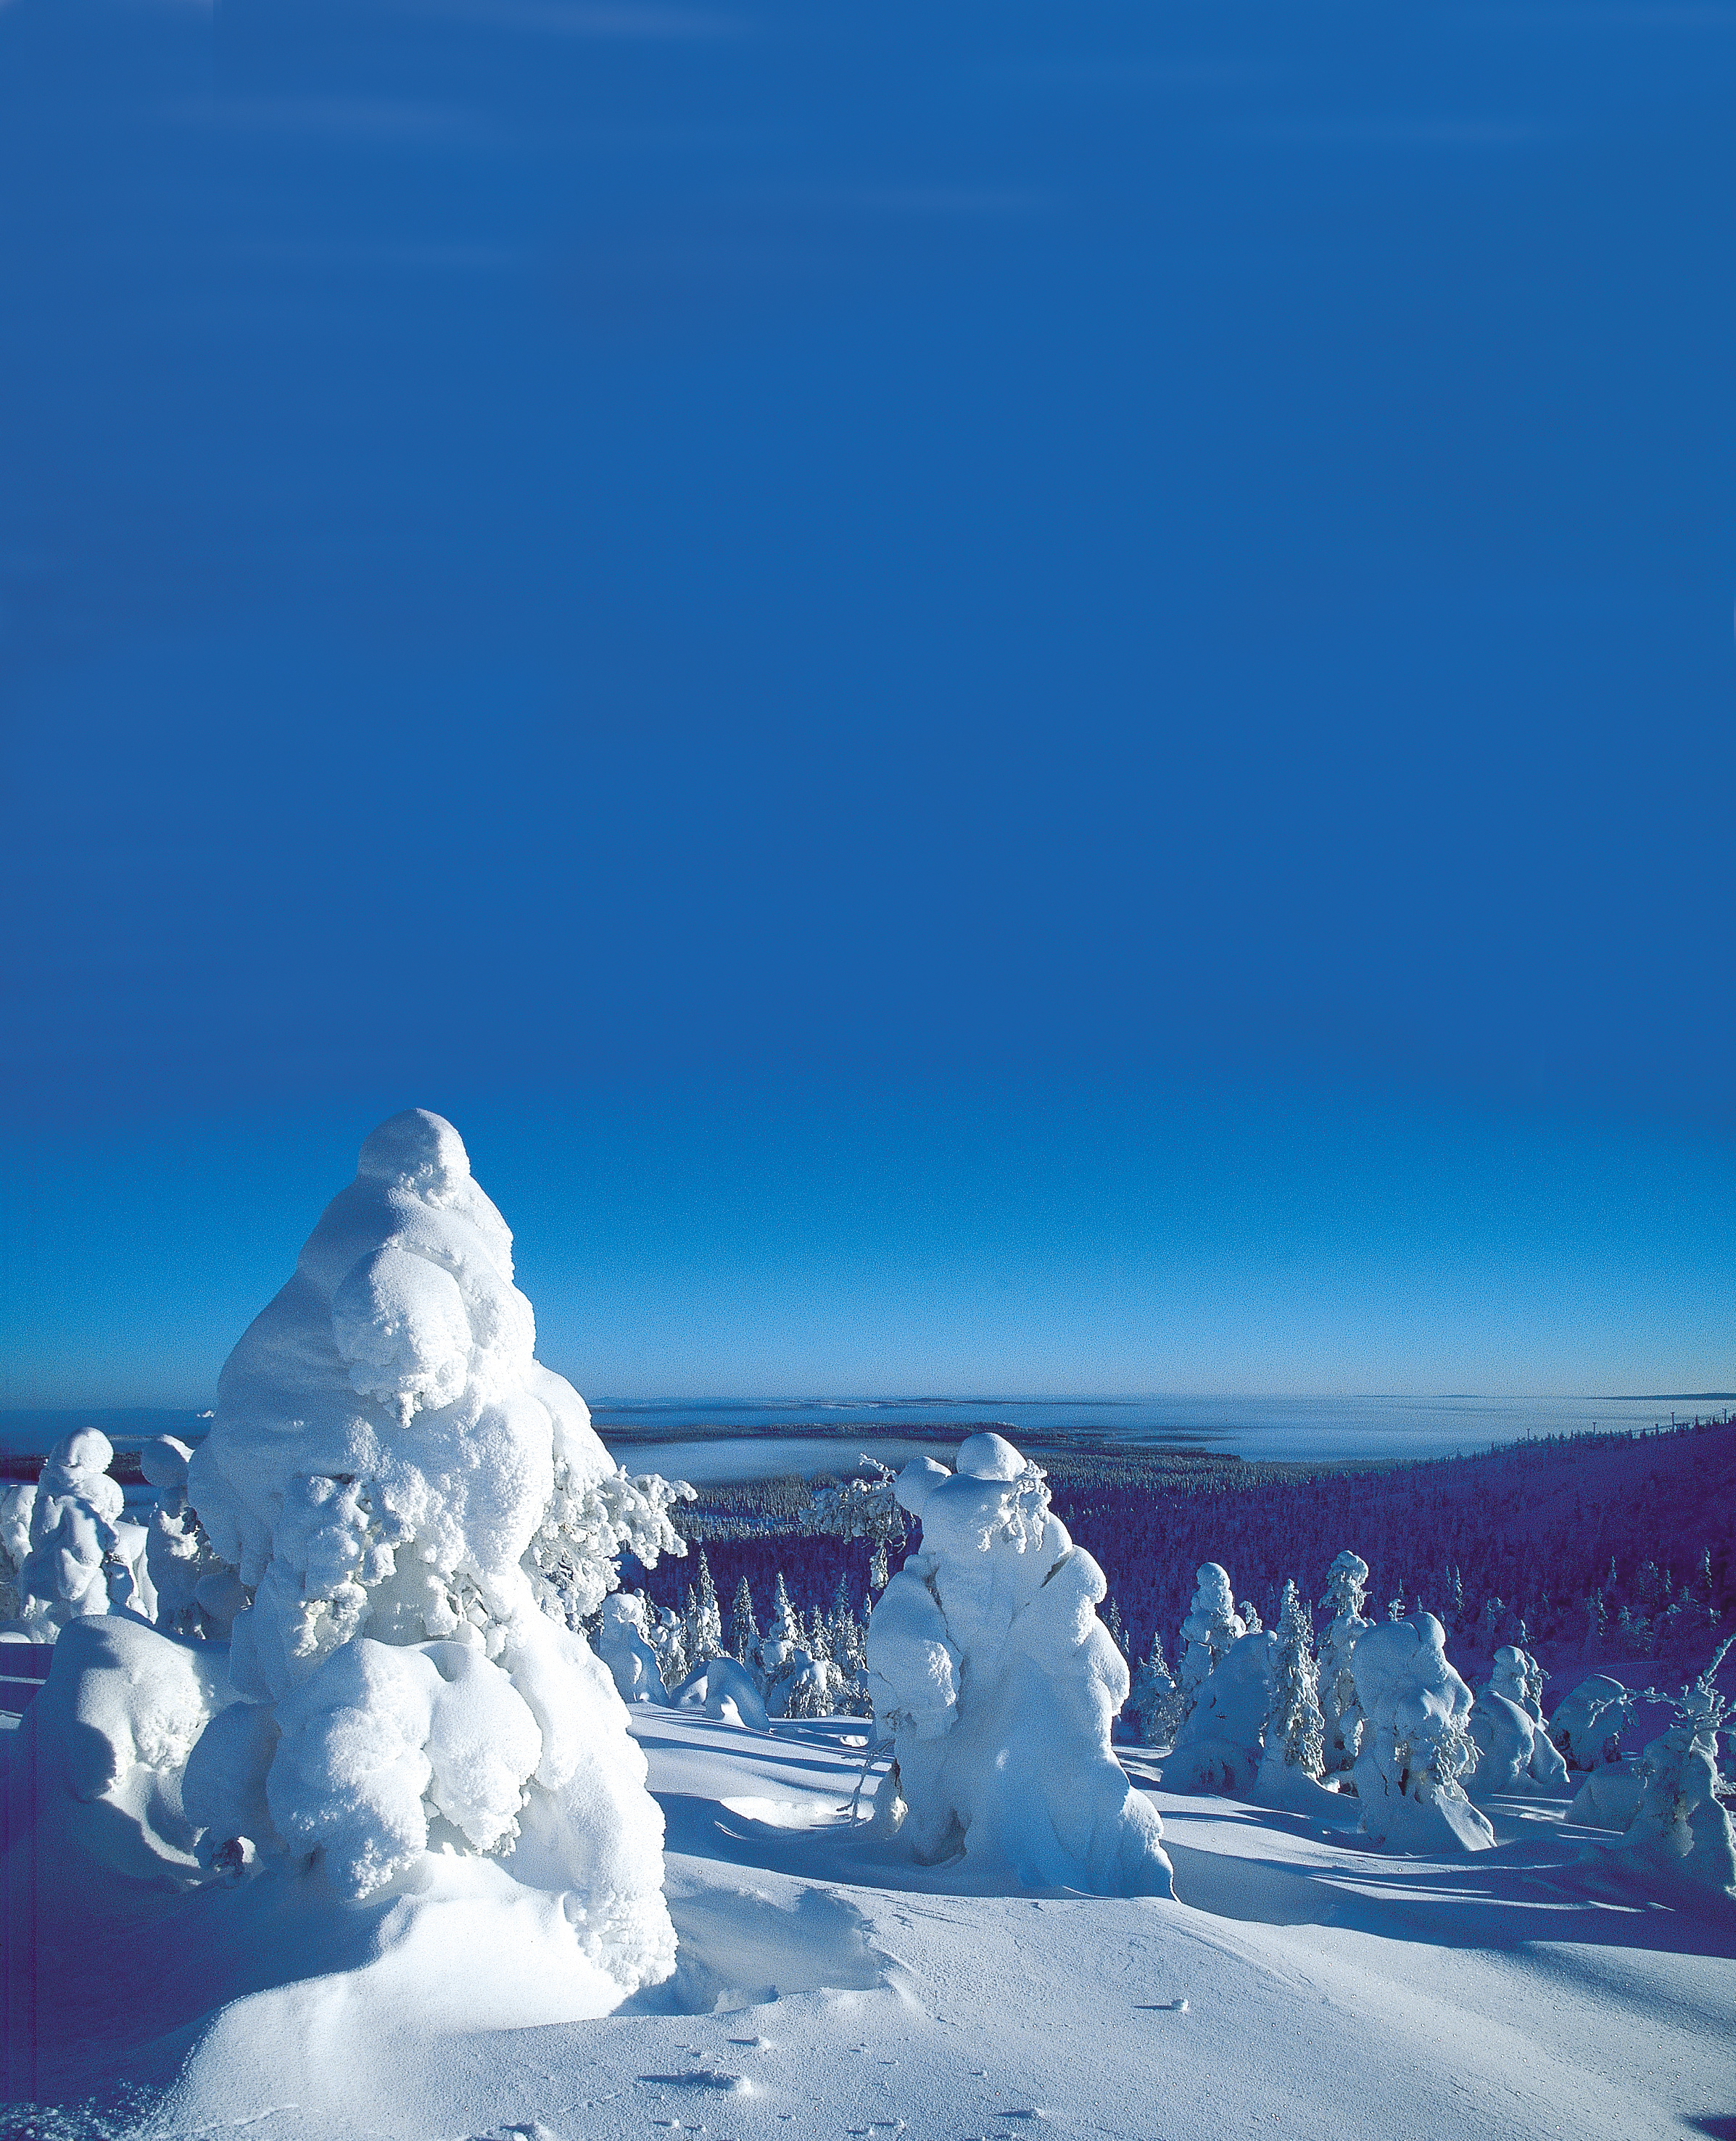 Snowshoeing in Finland